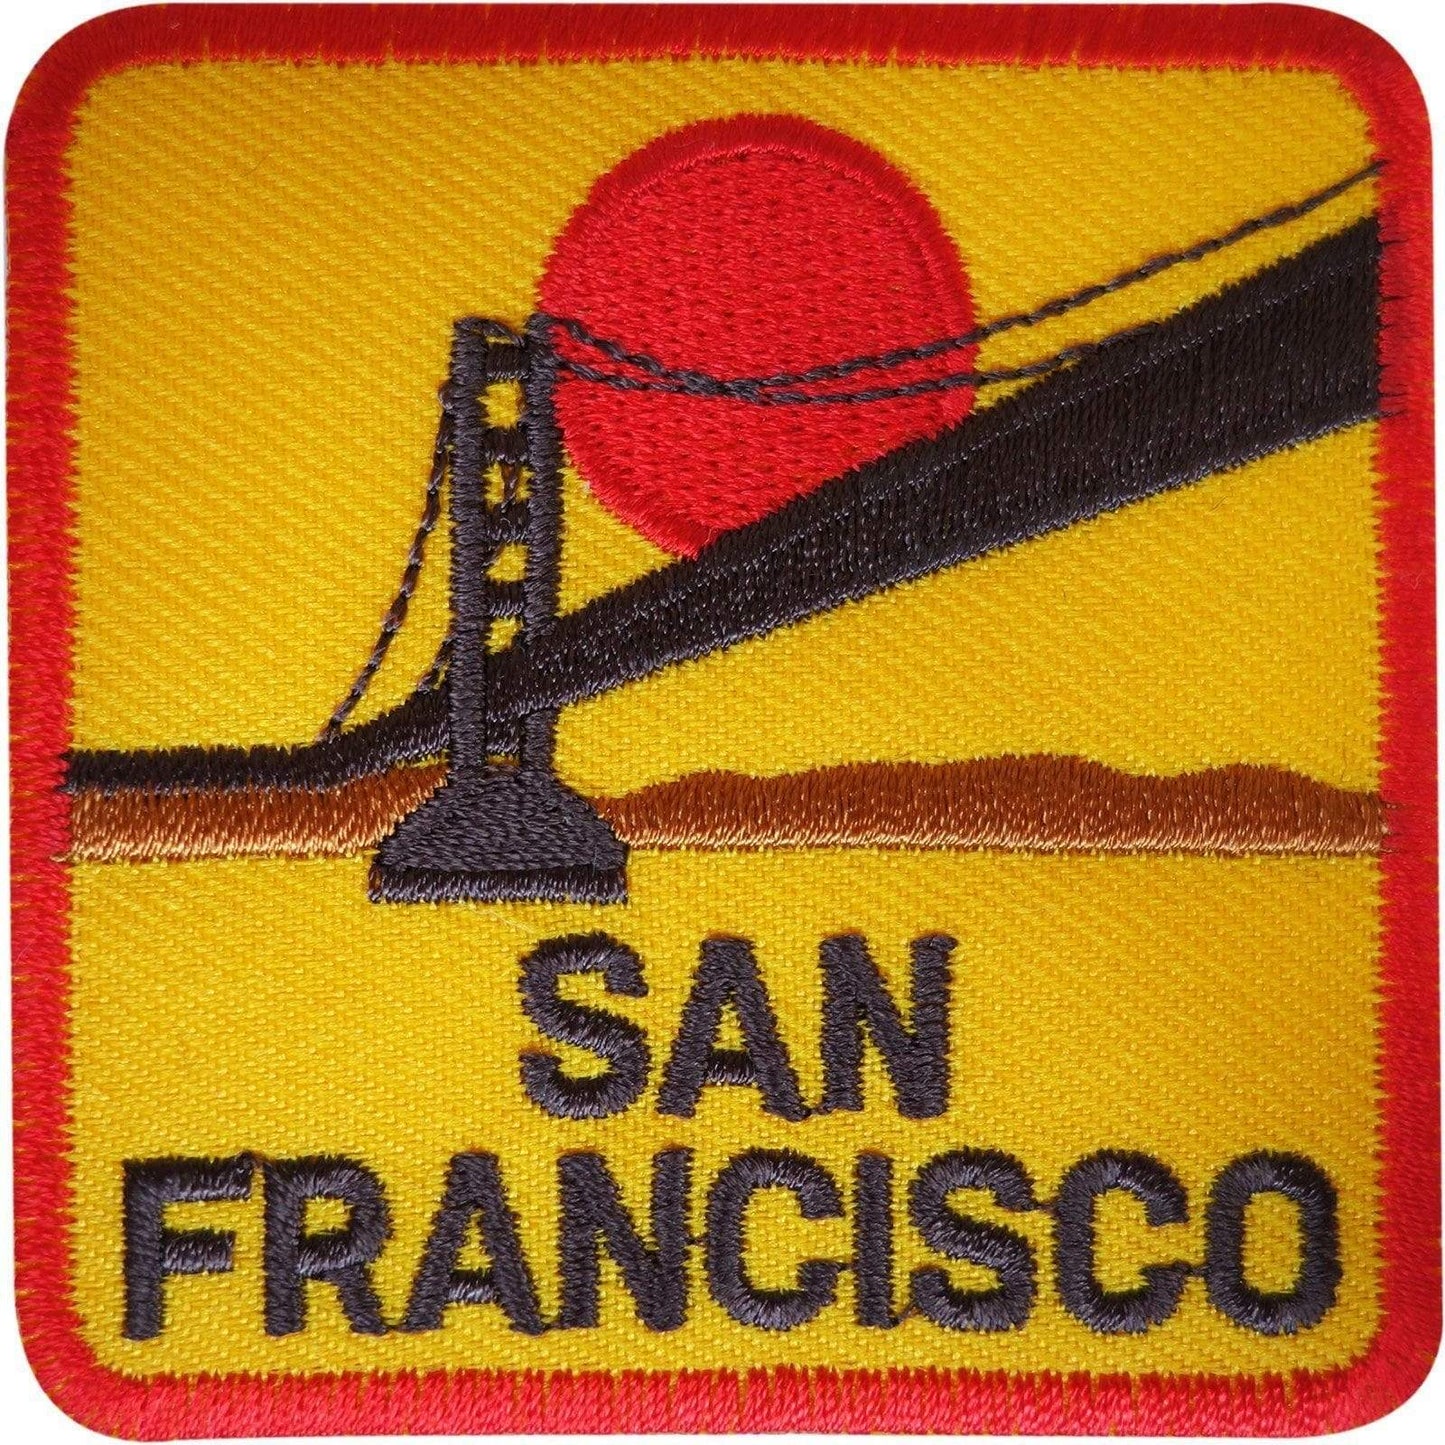 San Francisco Patch Badge Iron Sew On Embroidered California Golden Gate Bridge